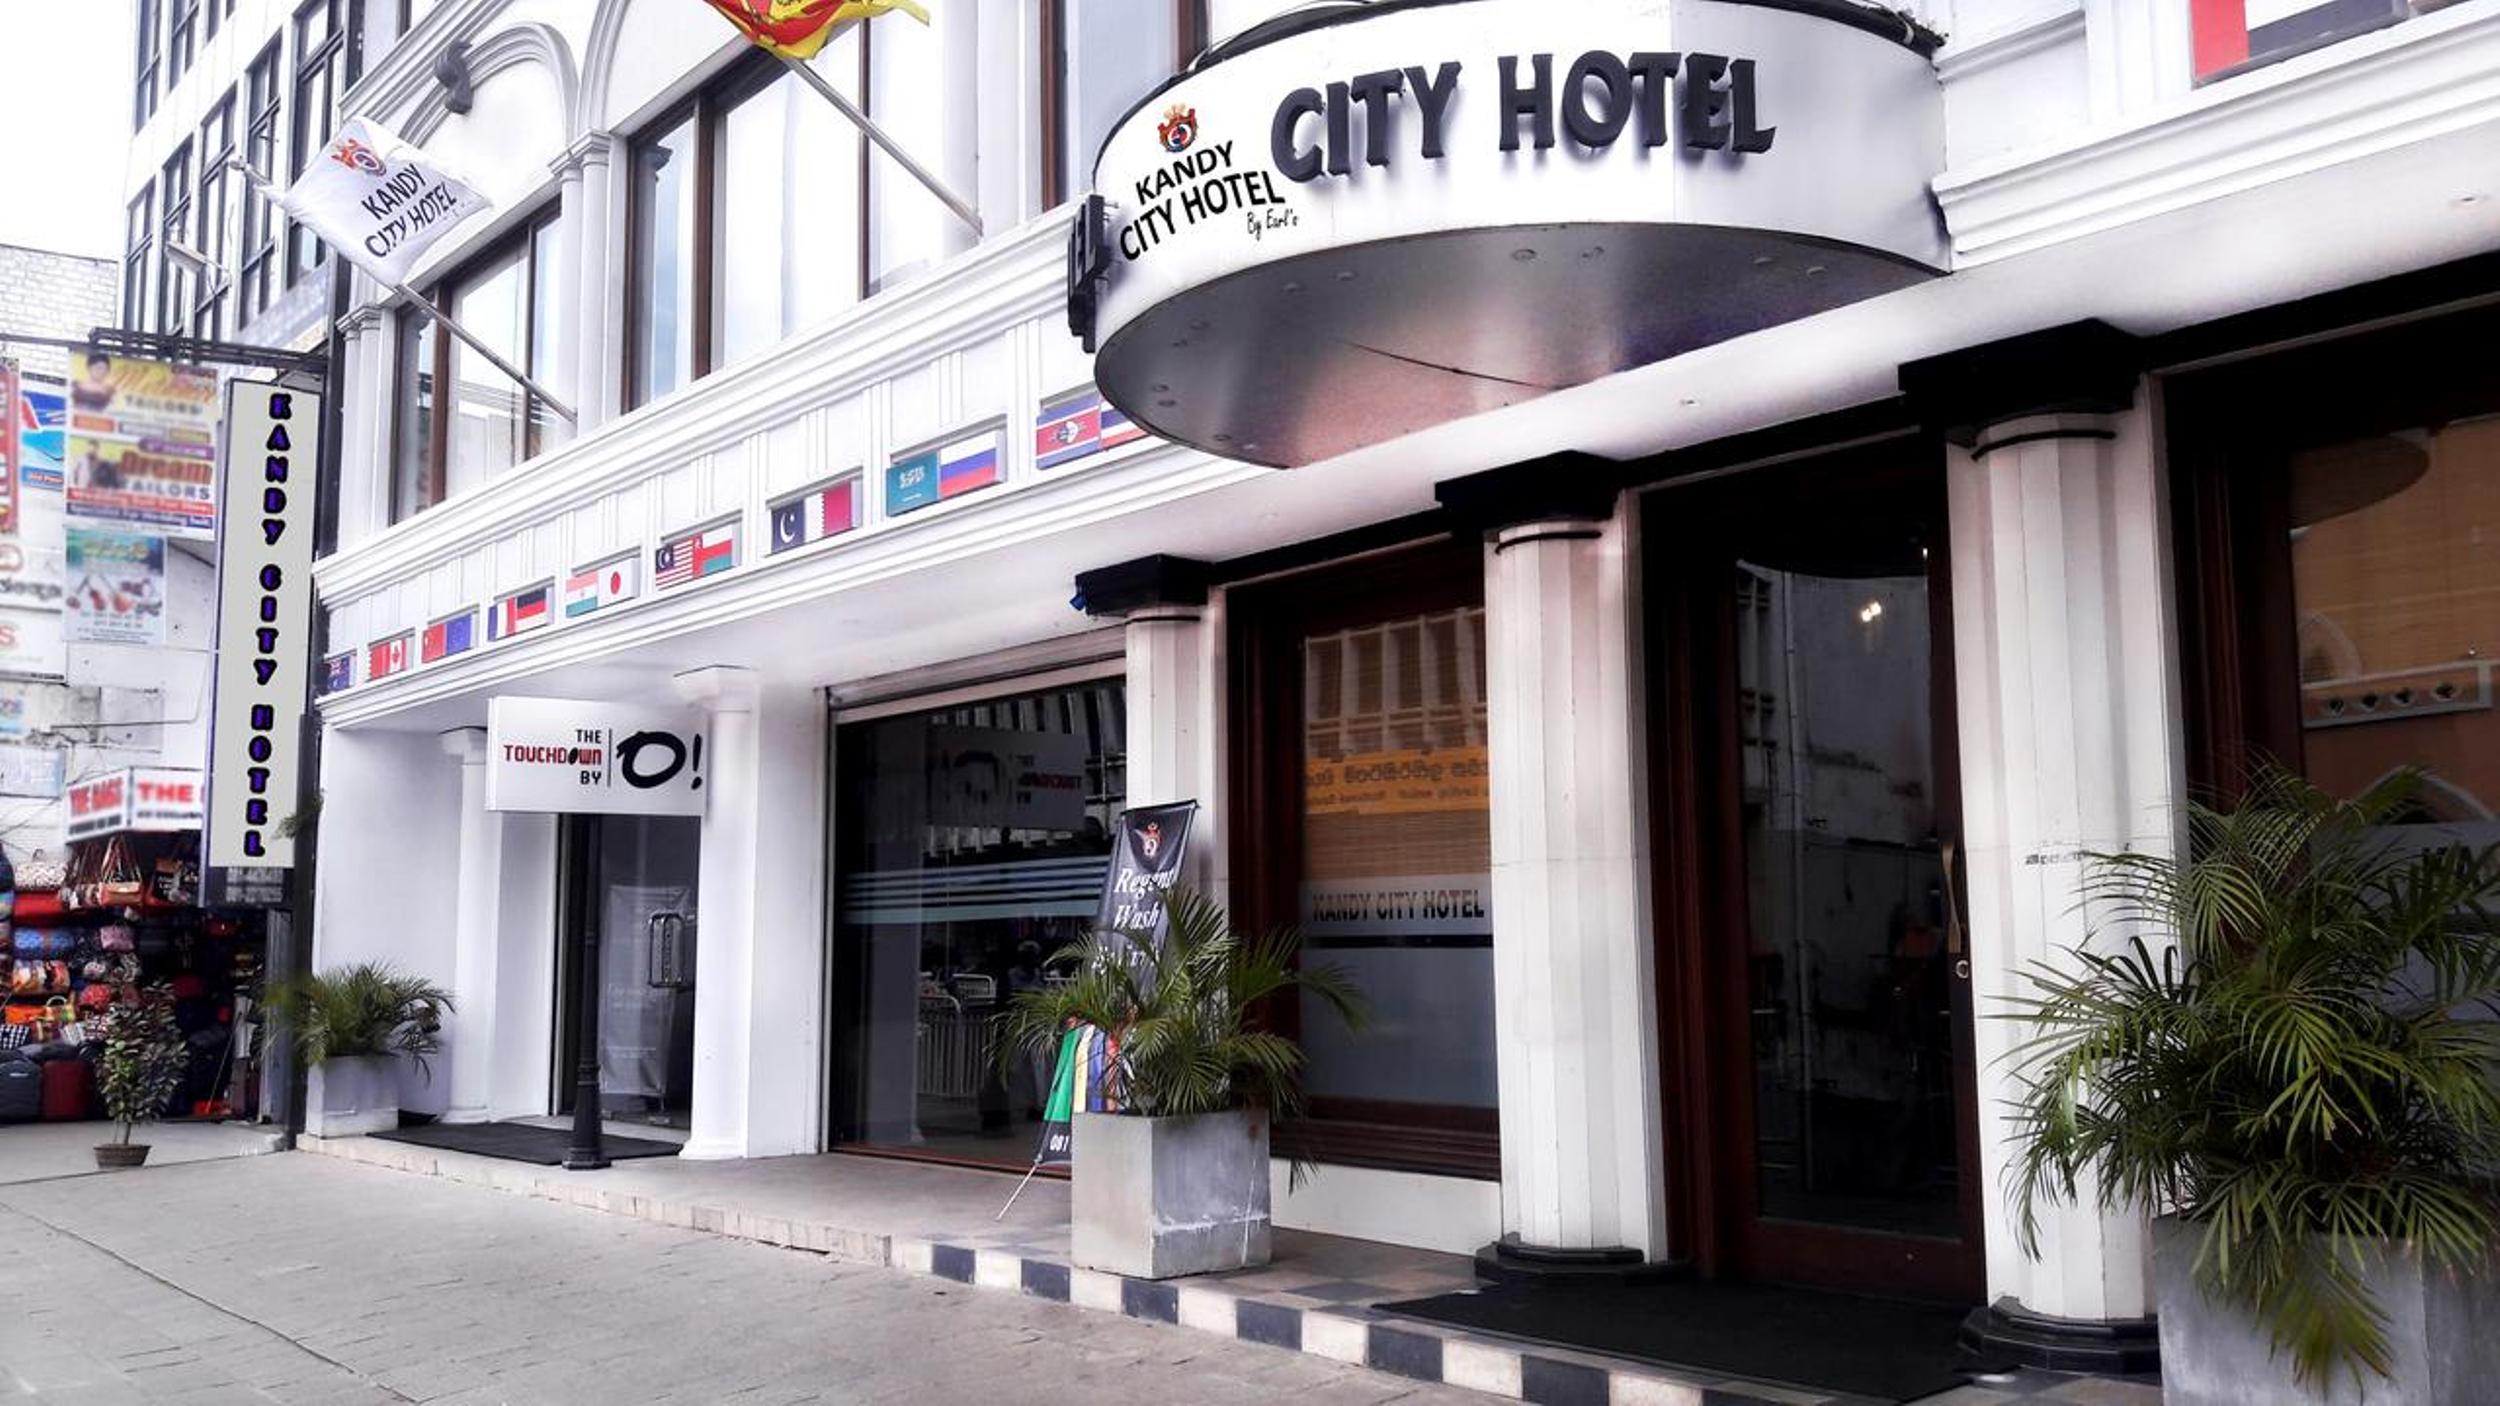 Kandy City Hotel by Earl's 𝗕𝗢𝗢𝗞 Kandy Hotel 𝘄𝗶𝘁𝗵 ₹𝟬 